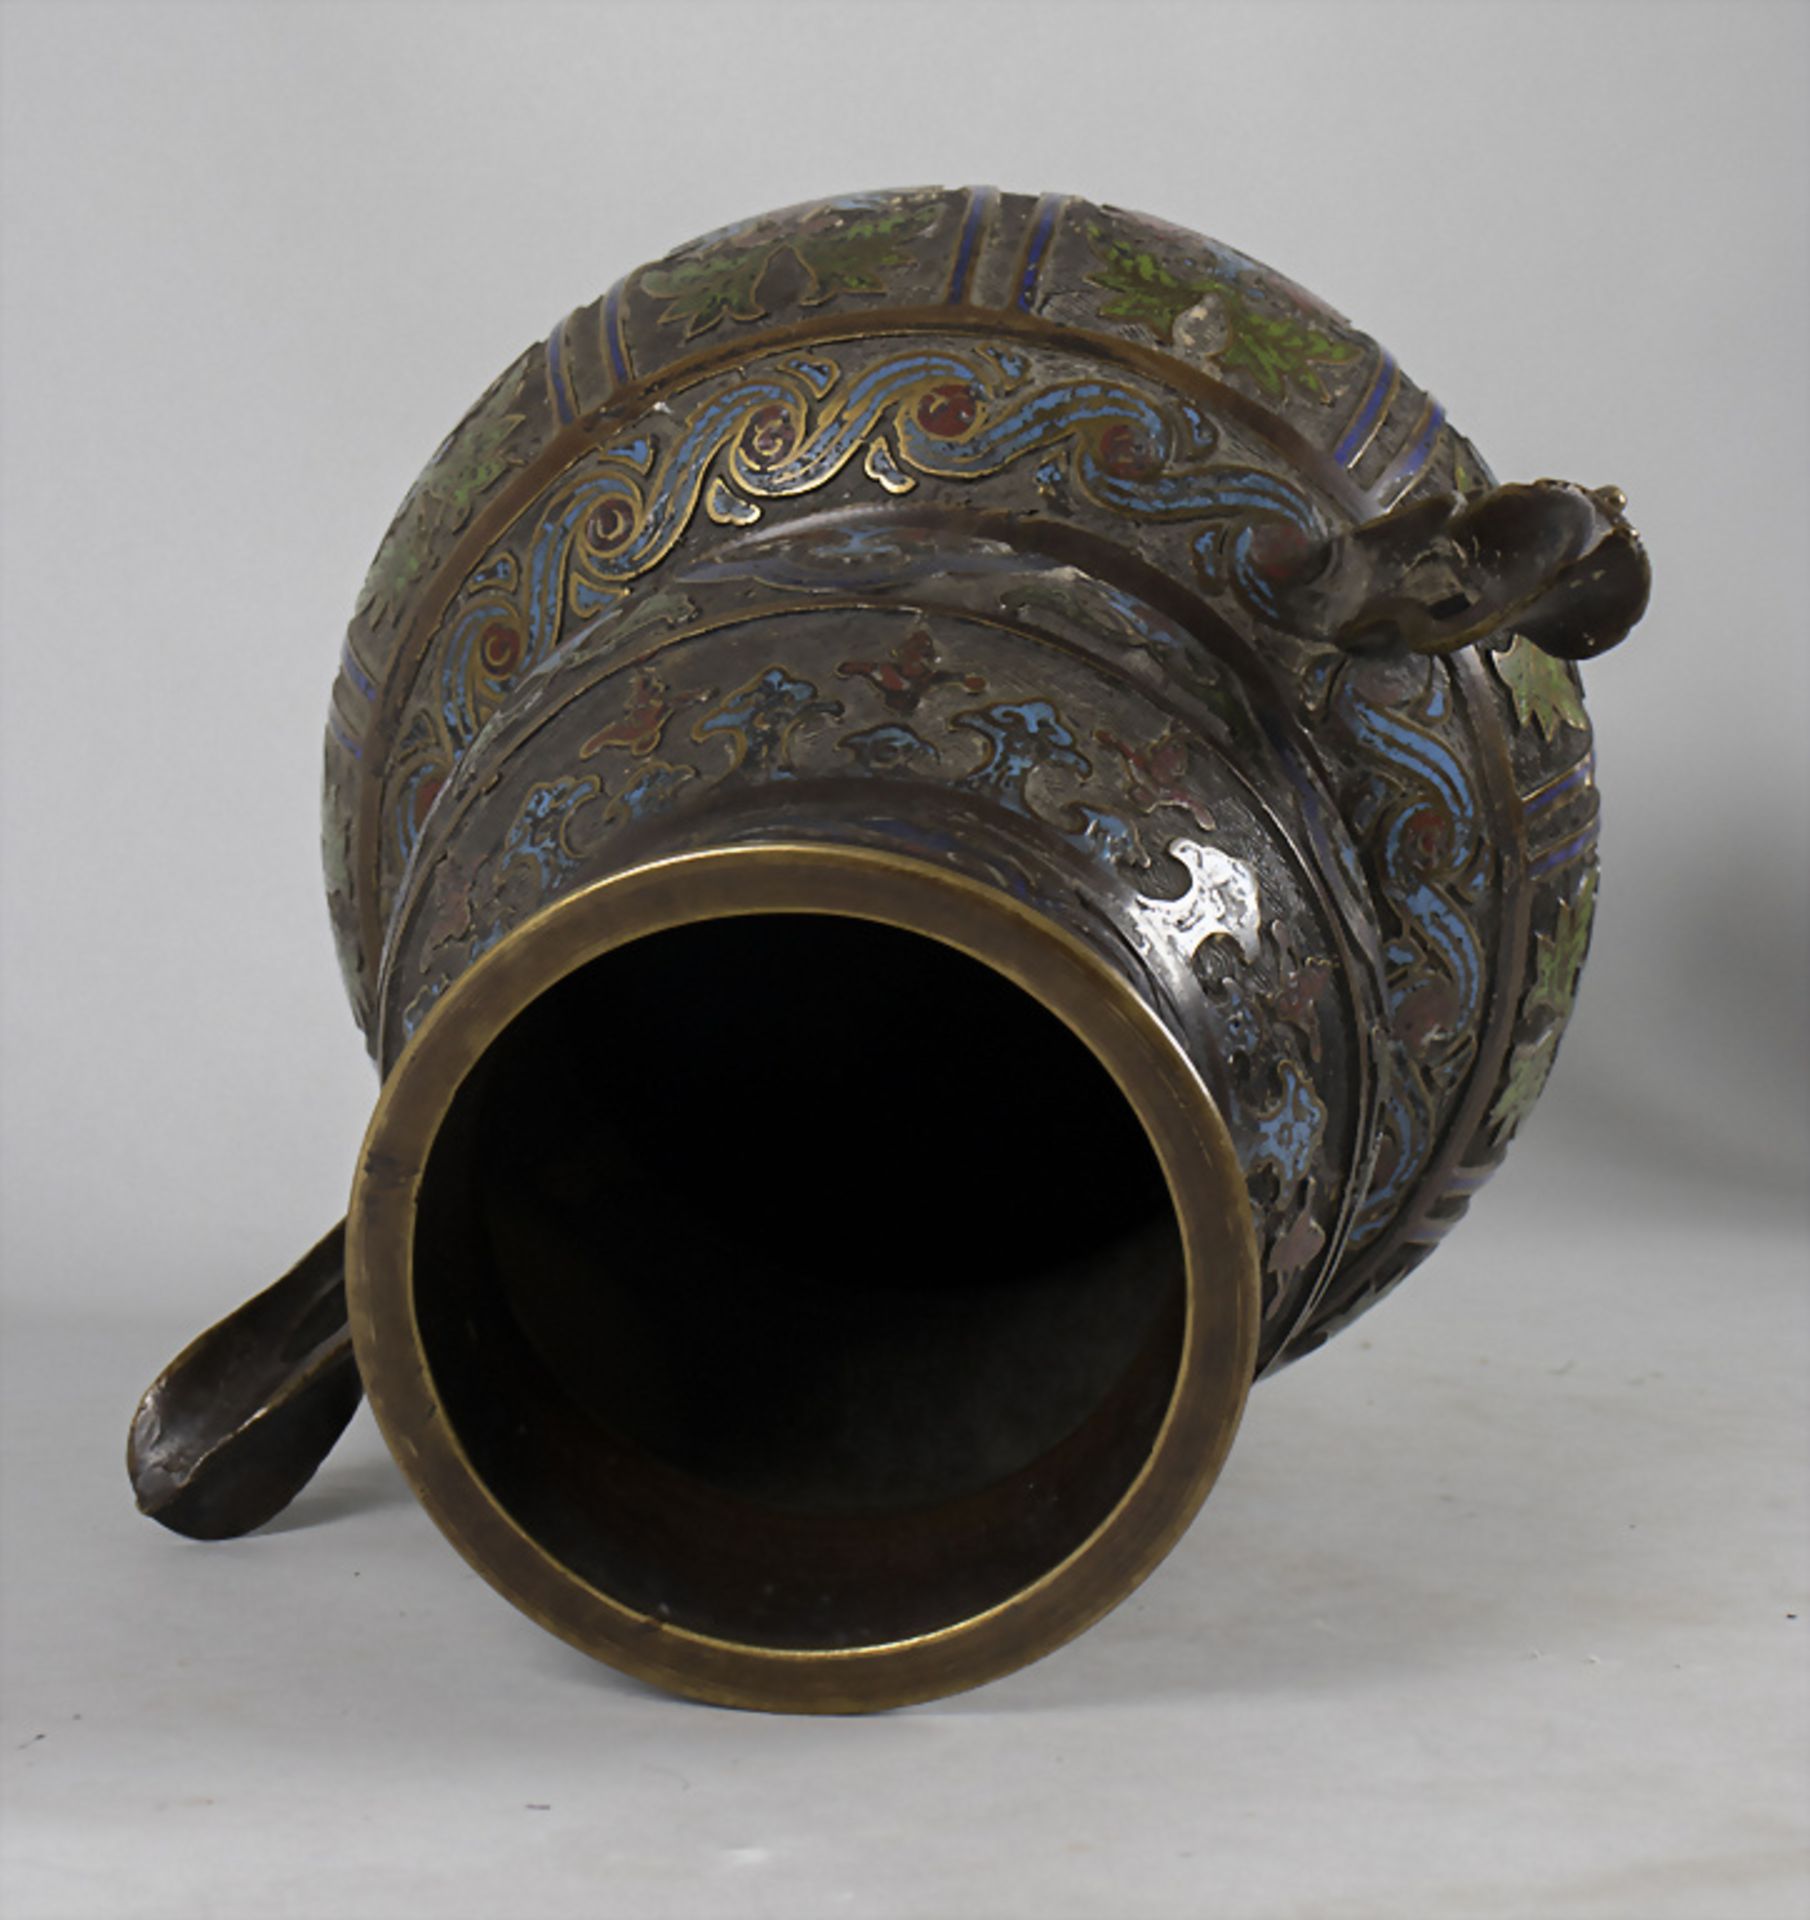 Bronzevase mit Champlevé Emaille / A bronze vase with Champlevé enamel , China, 19. Jh. - Bild 5 aus 8